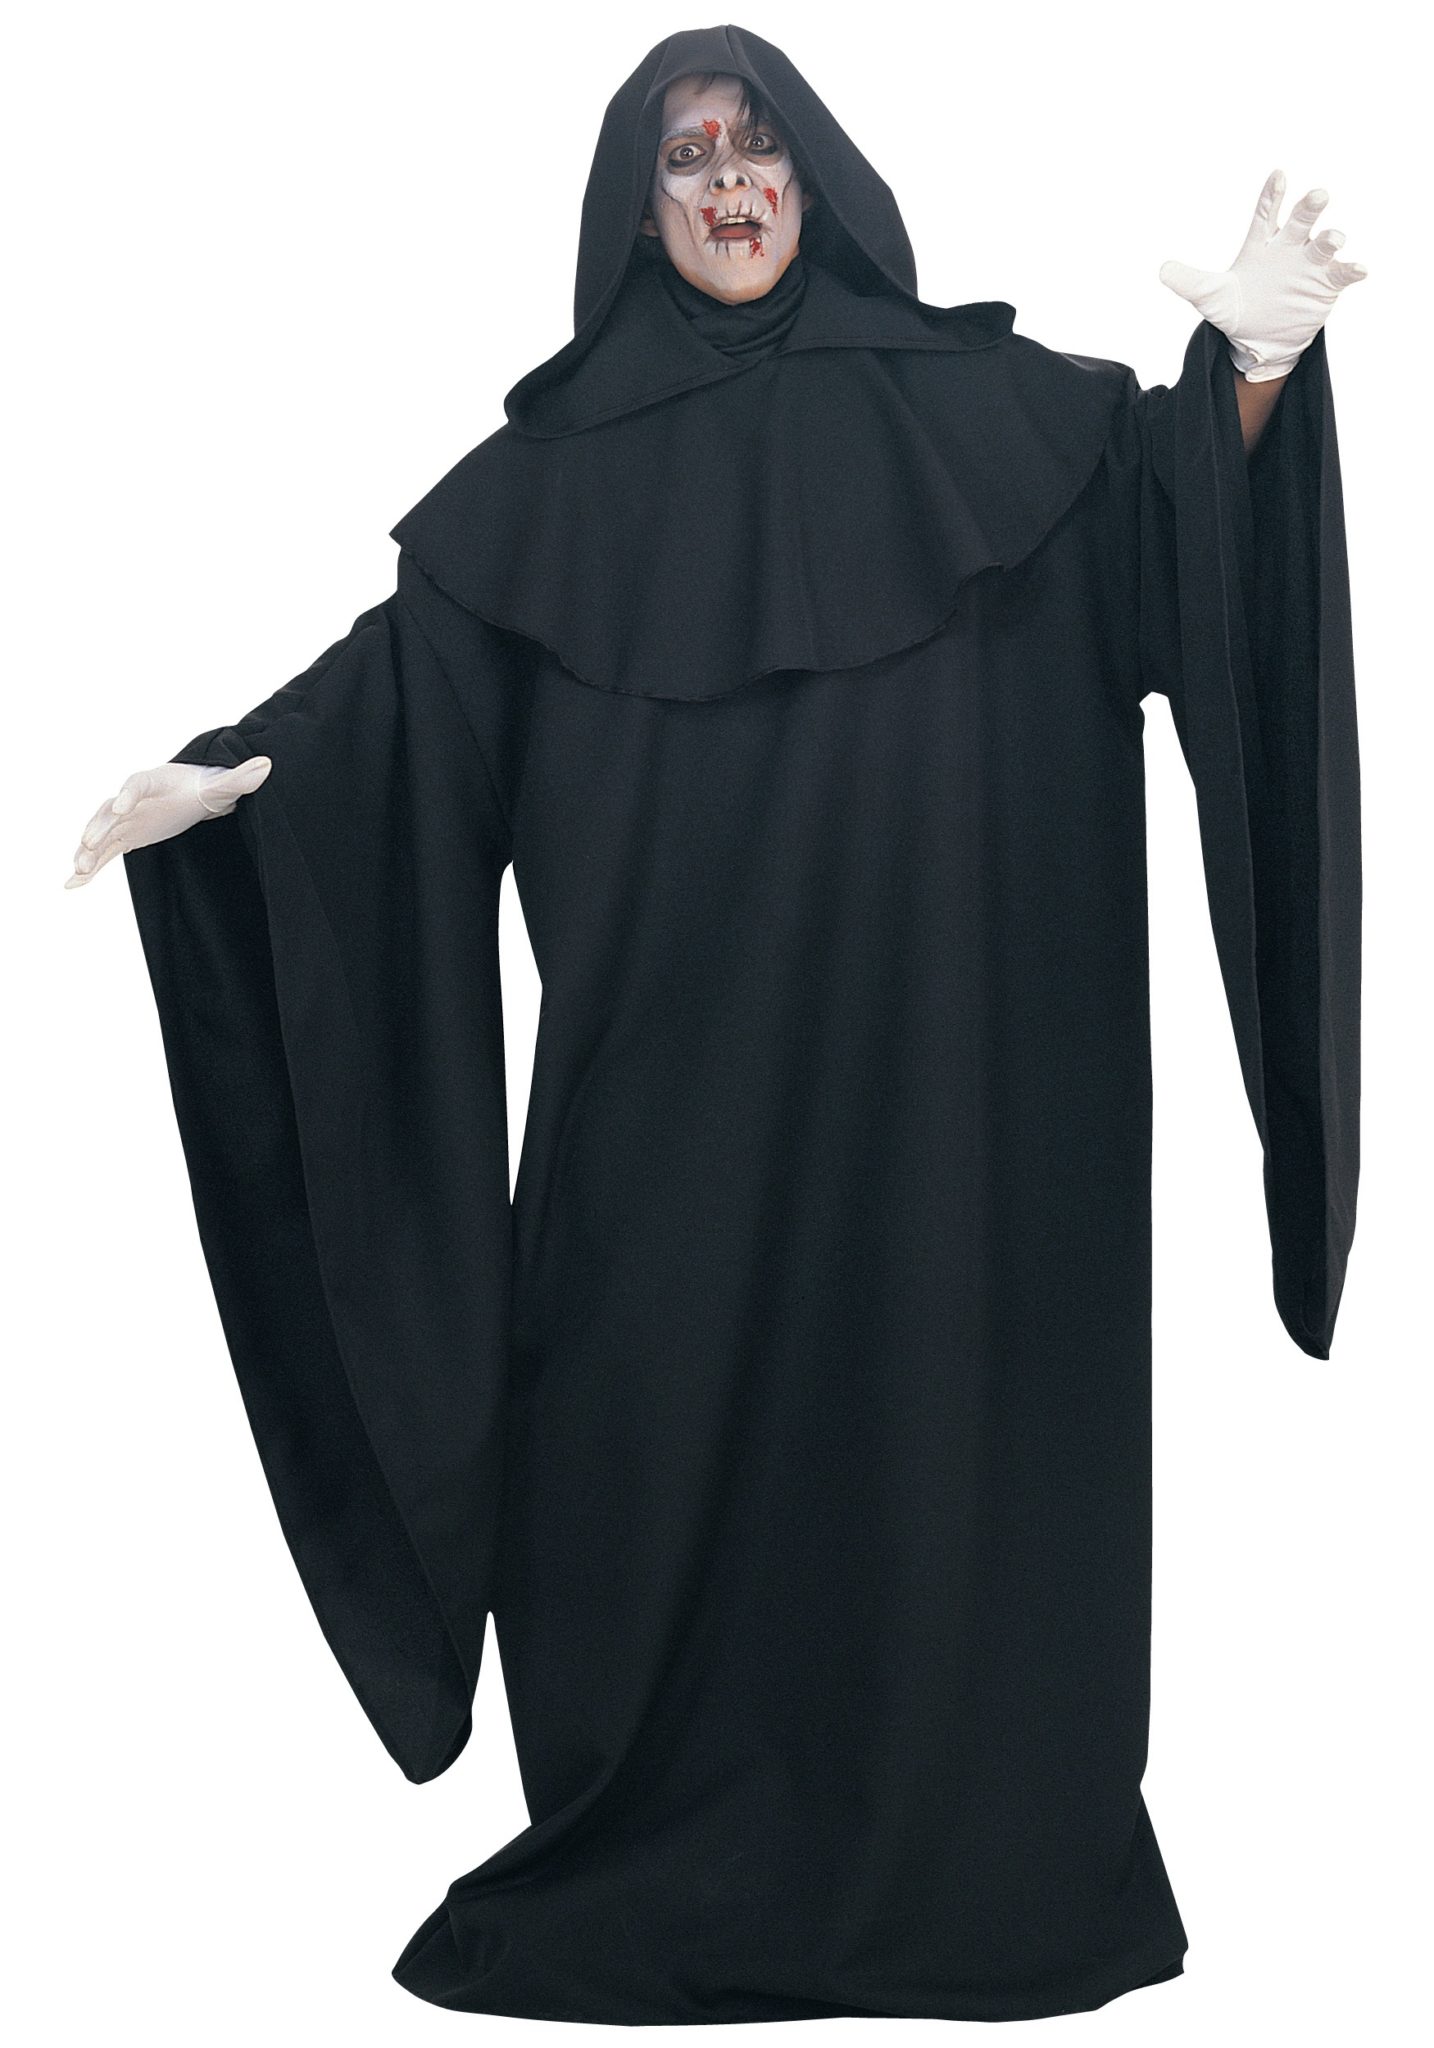 grim reaper costume amazon